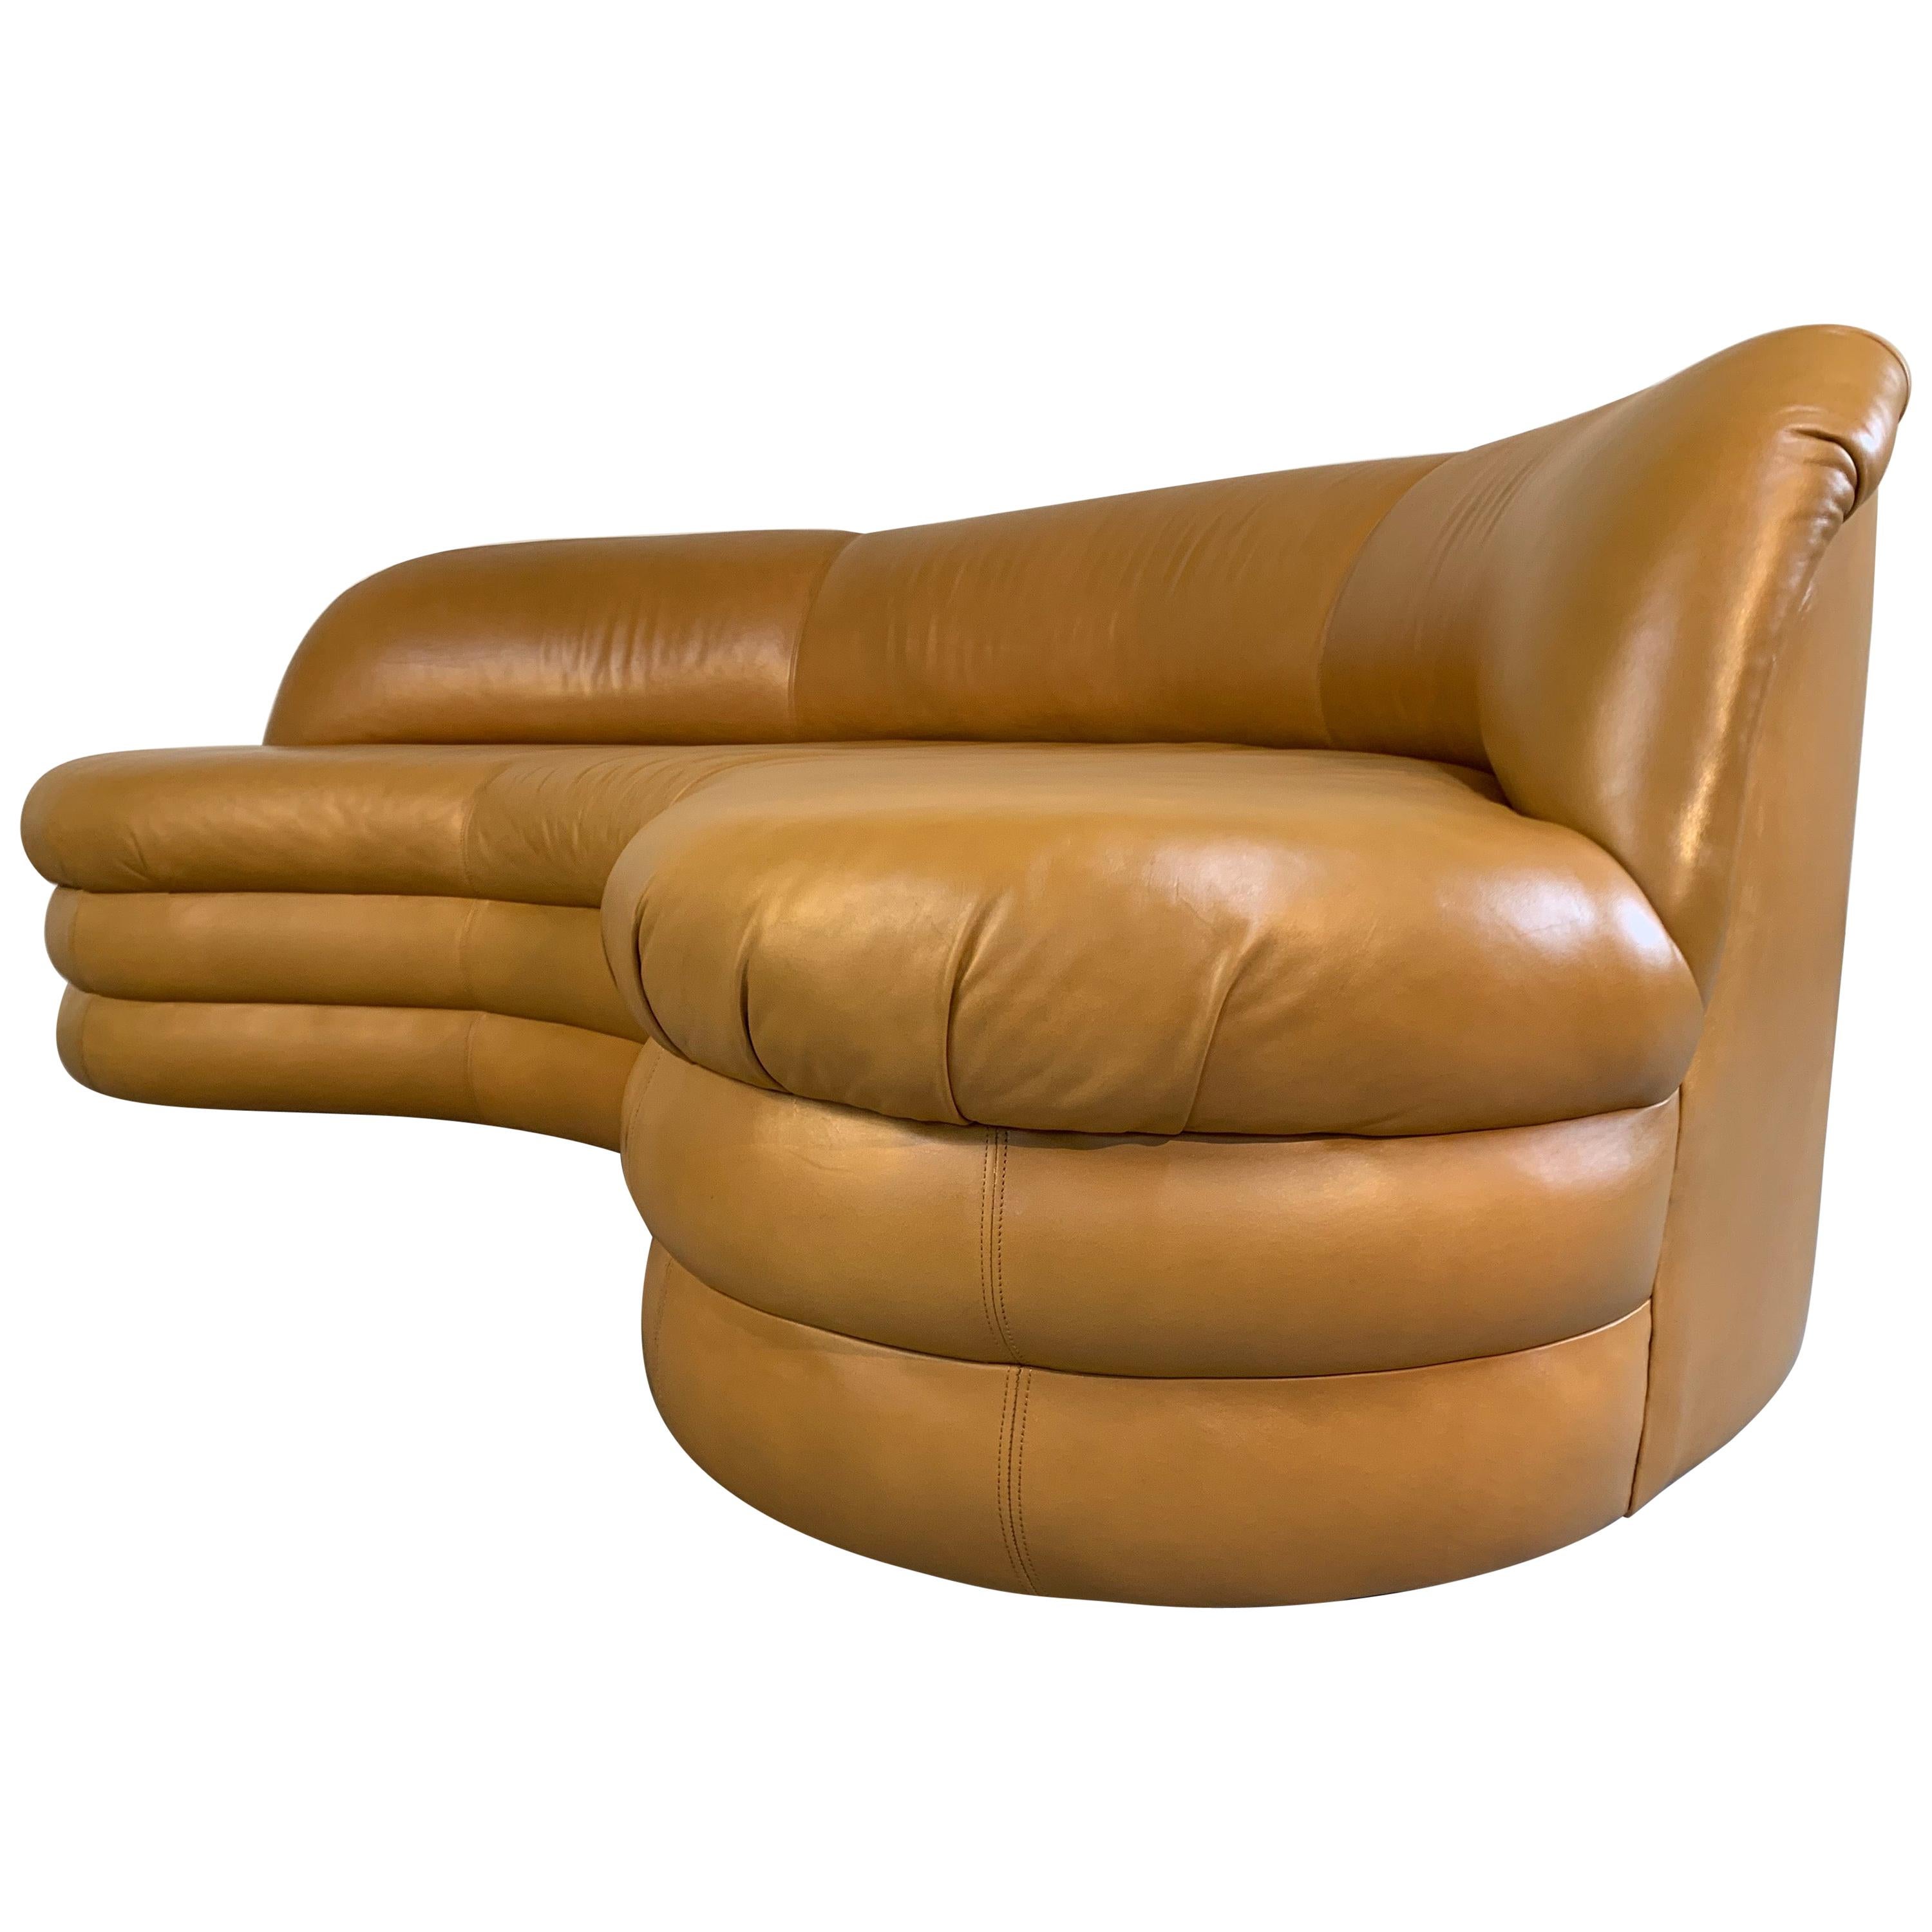 Vladimir Kagan Sofa for Directional Biomorphic Kidney Form in Caramel Leather